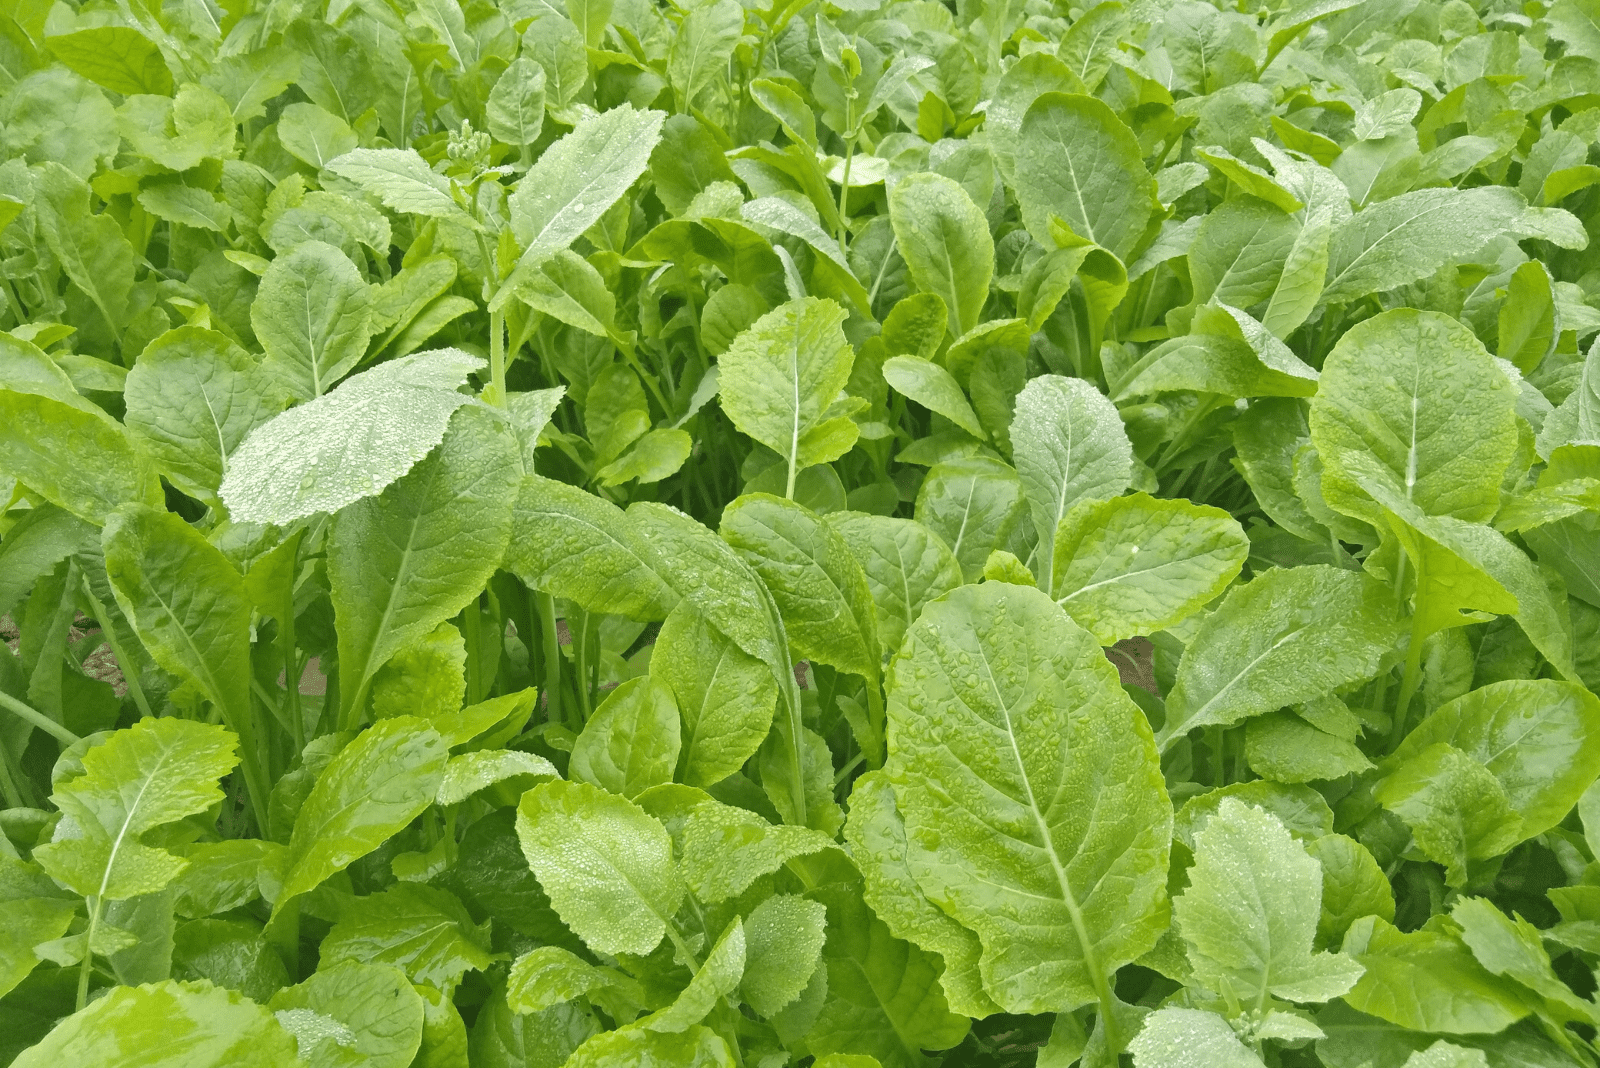 Napa spinach